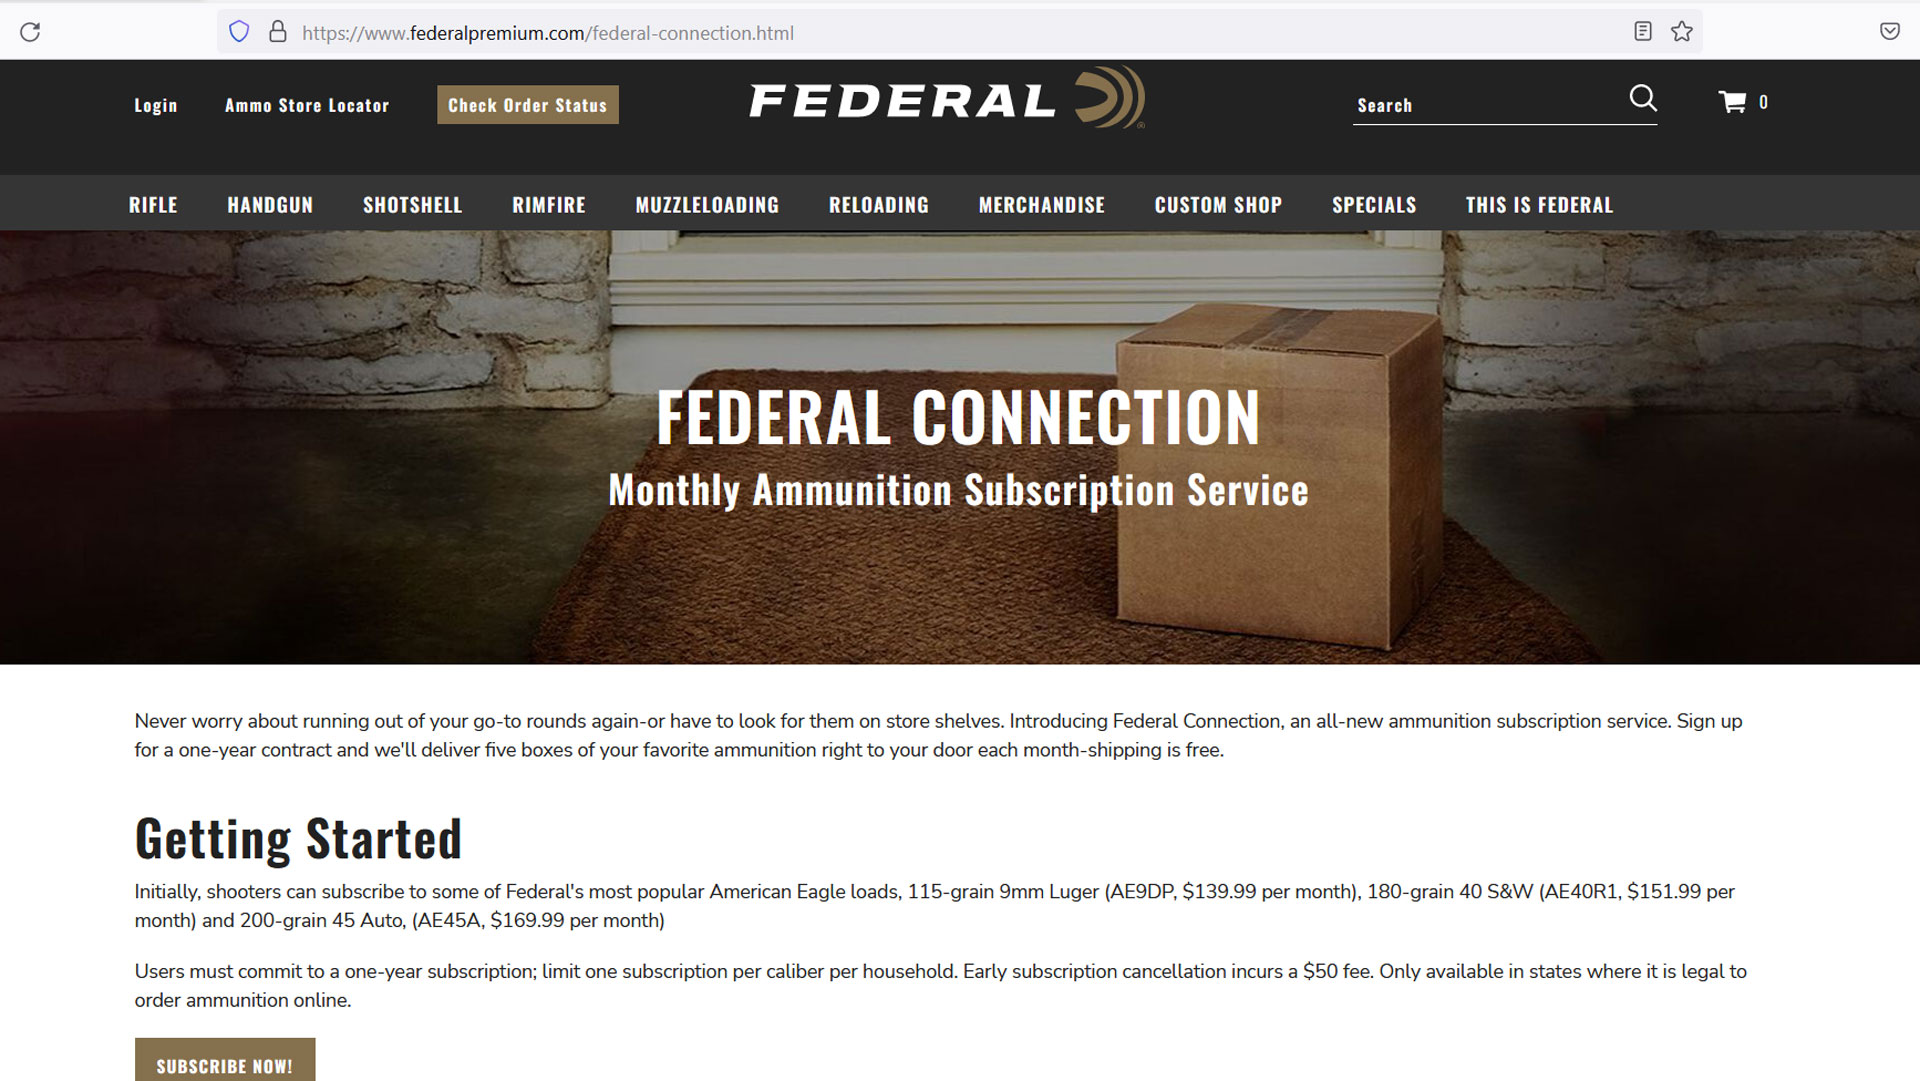 screenshot website federal premium ammunition subscription service explaination signup